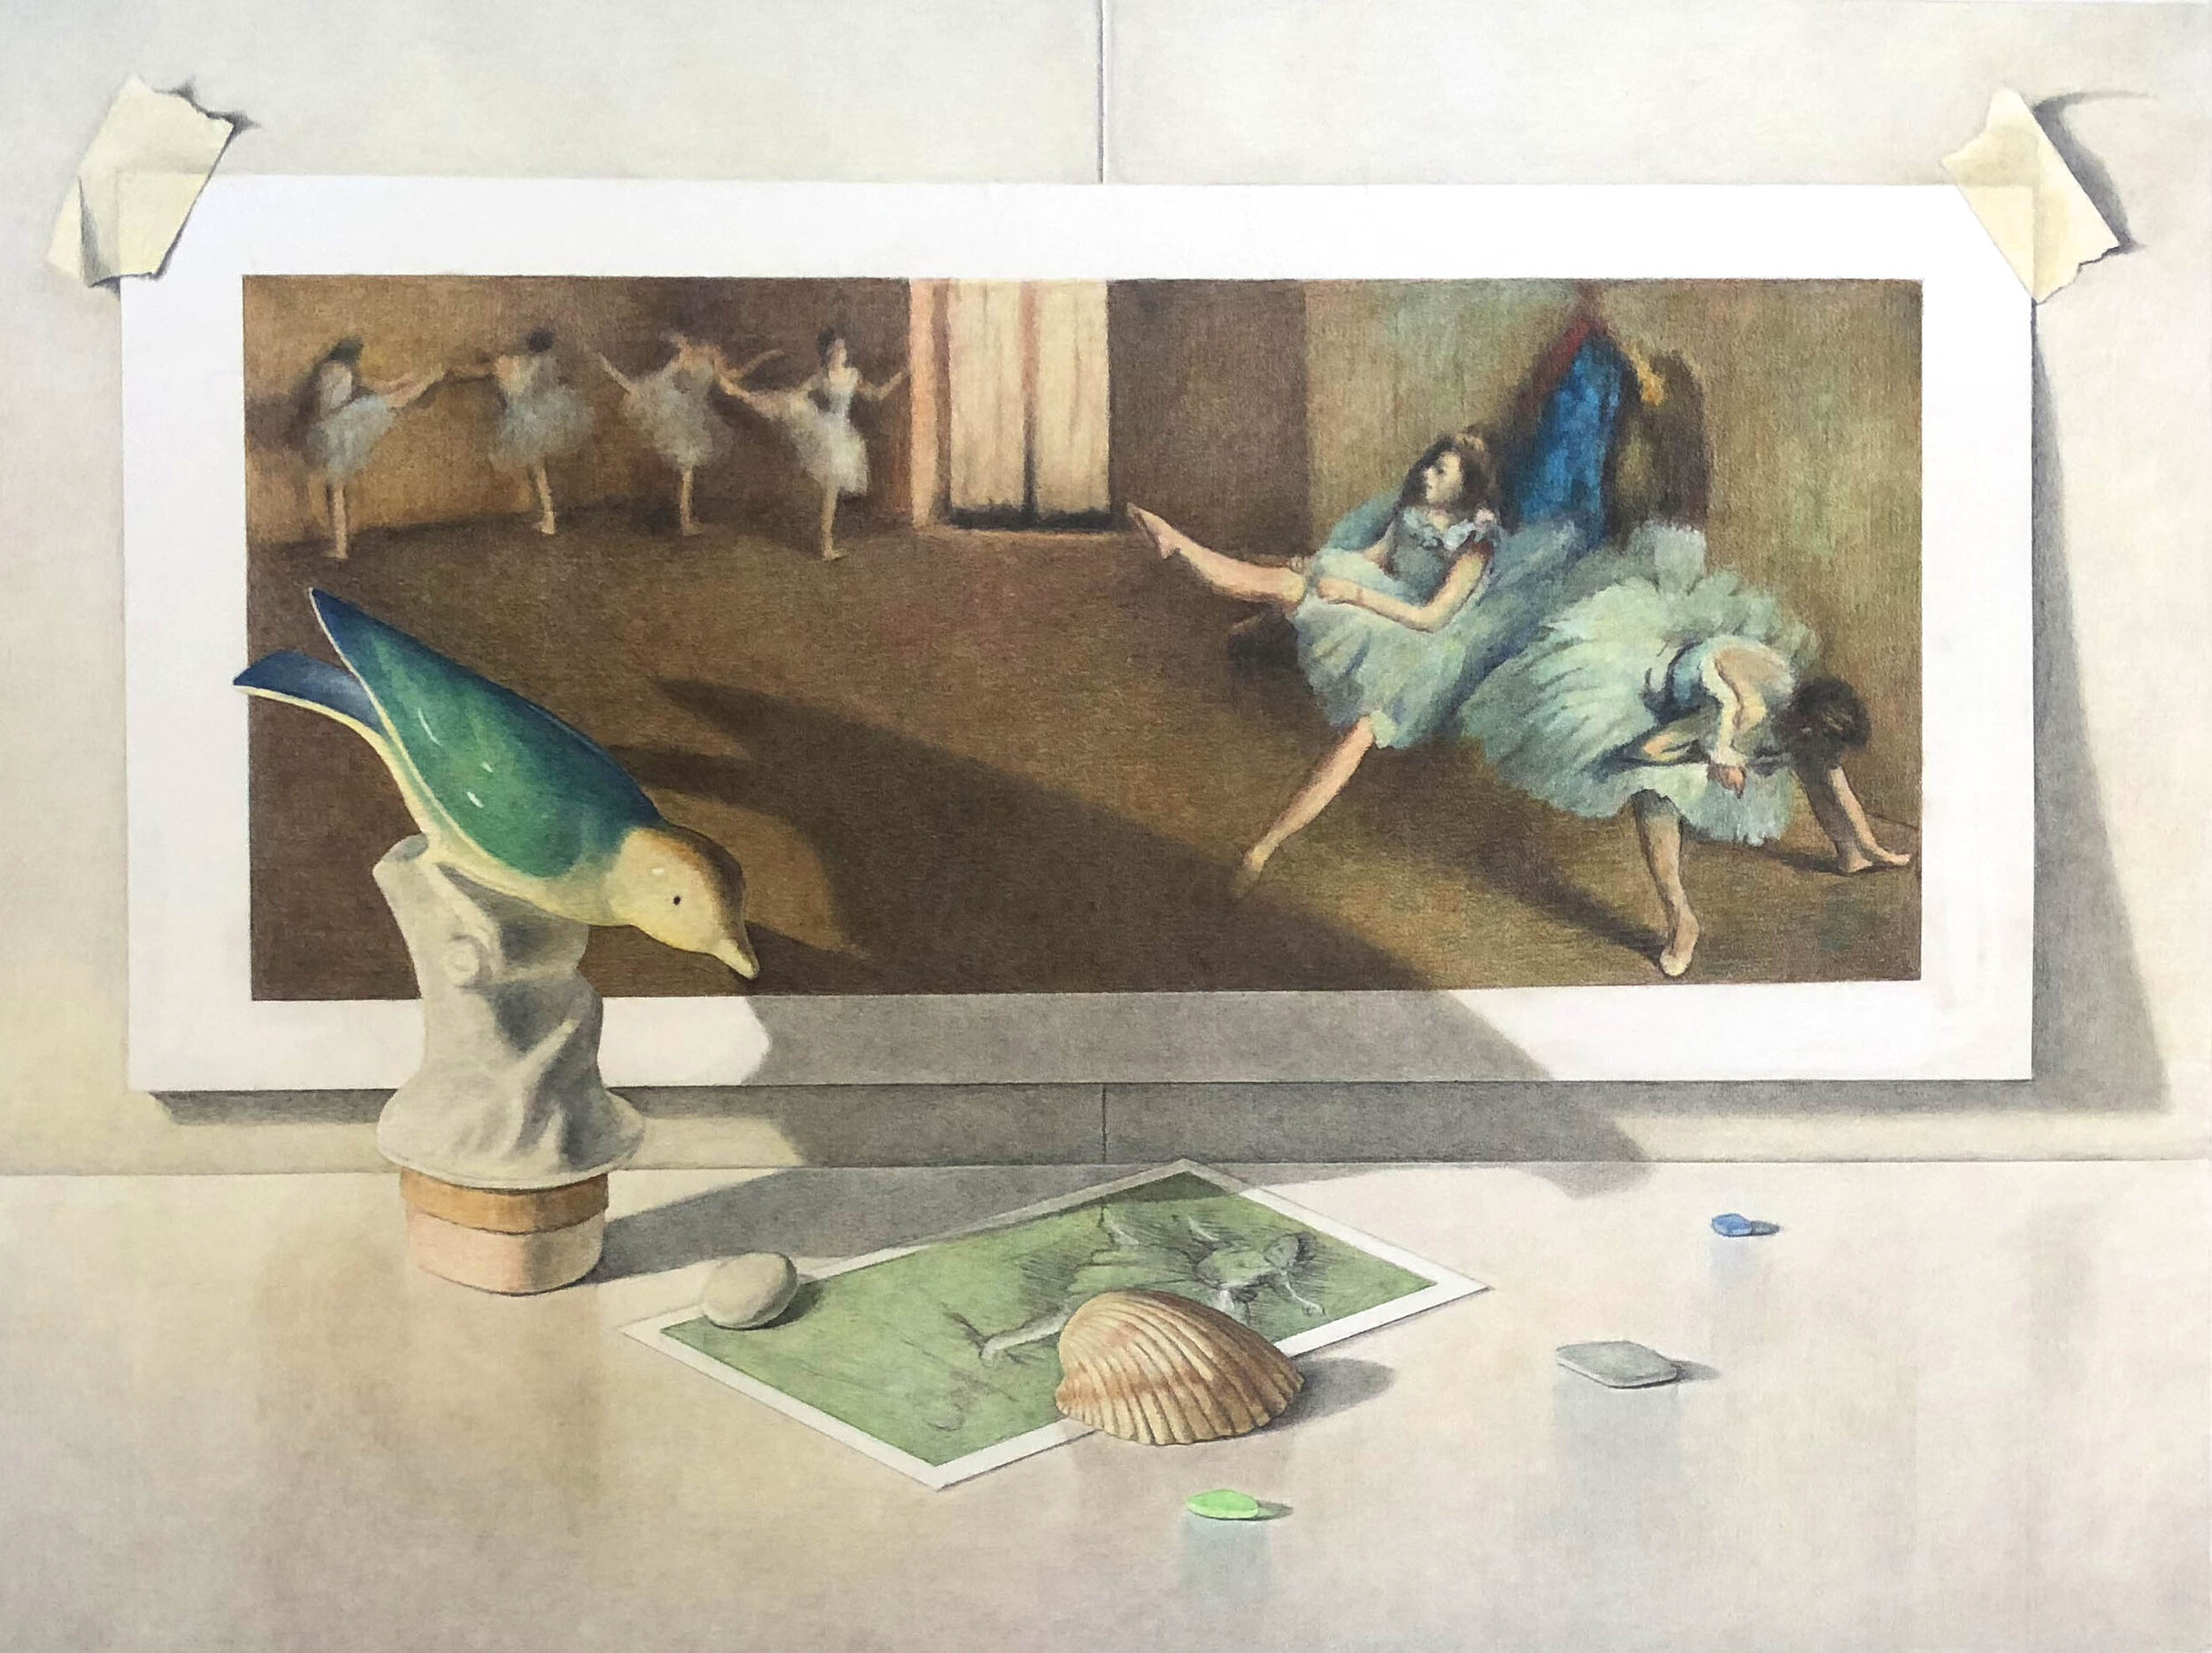  Ceramic Bird with Degas (SOLD)